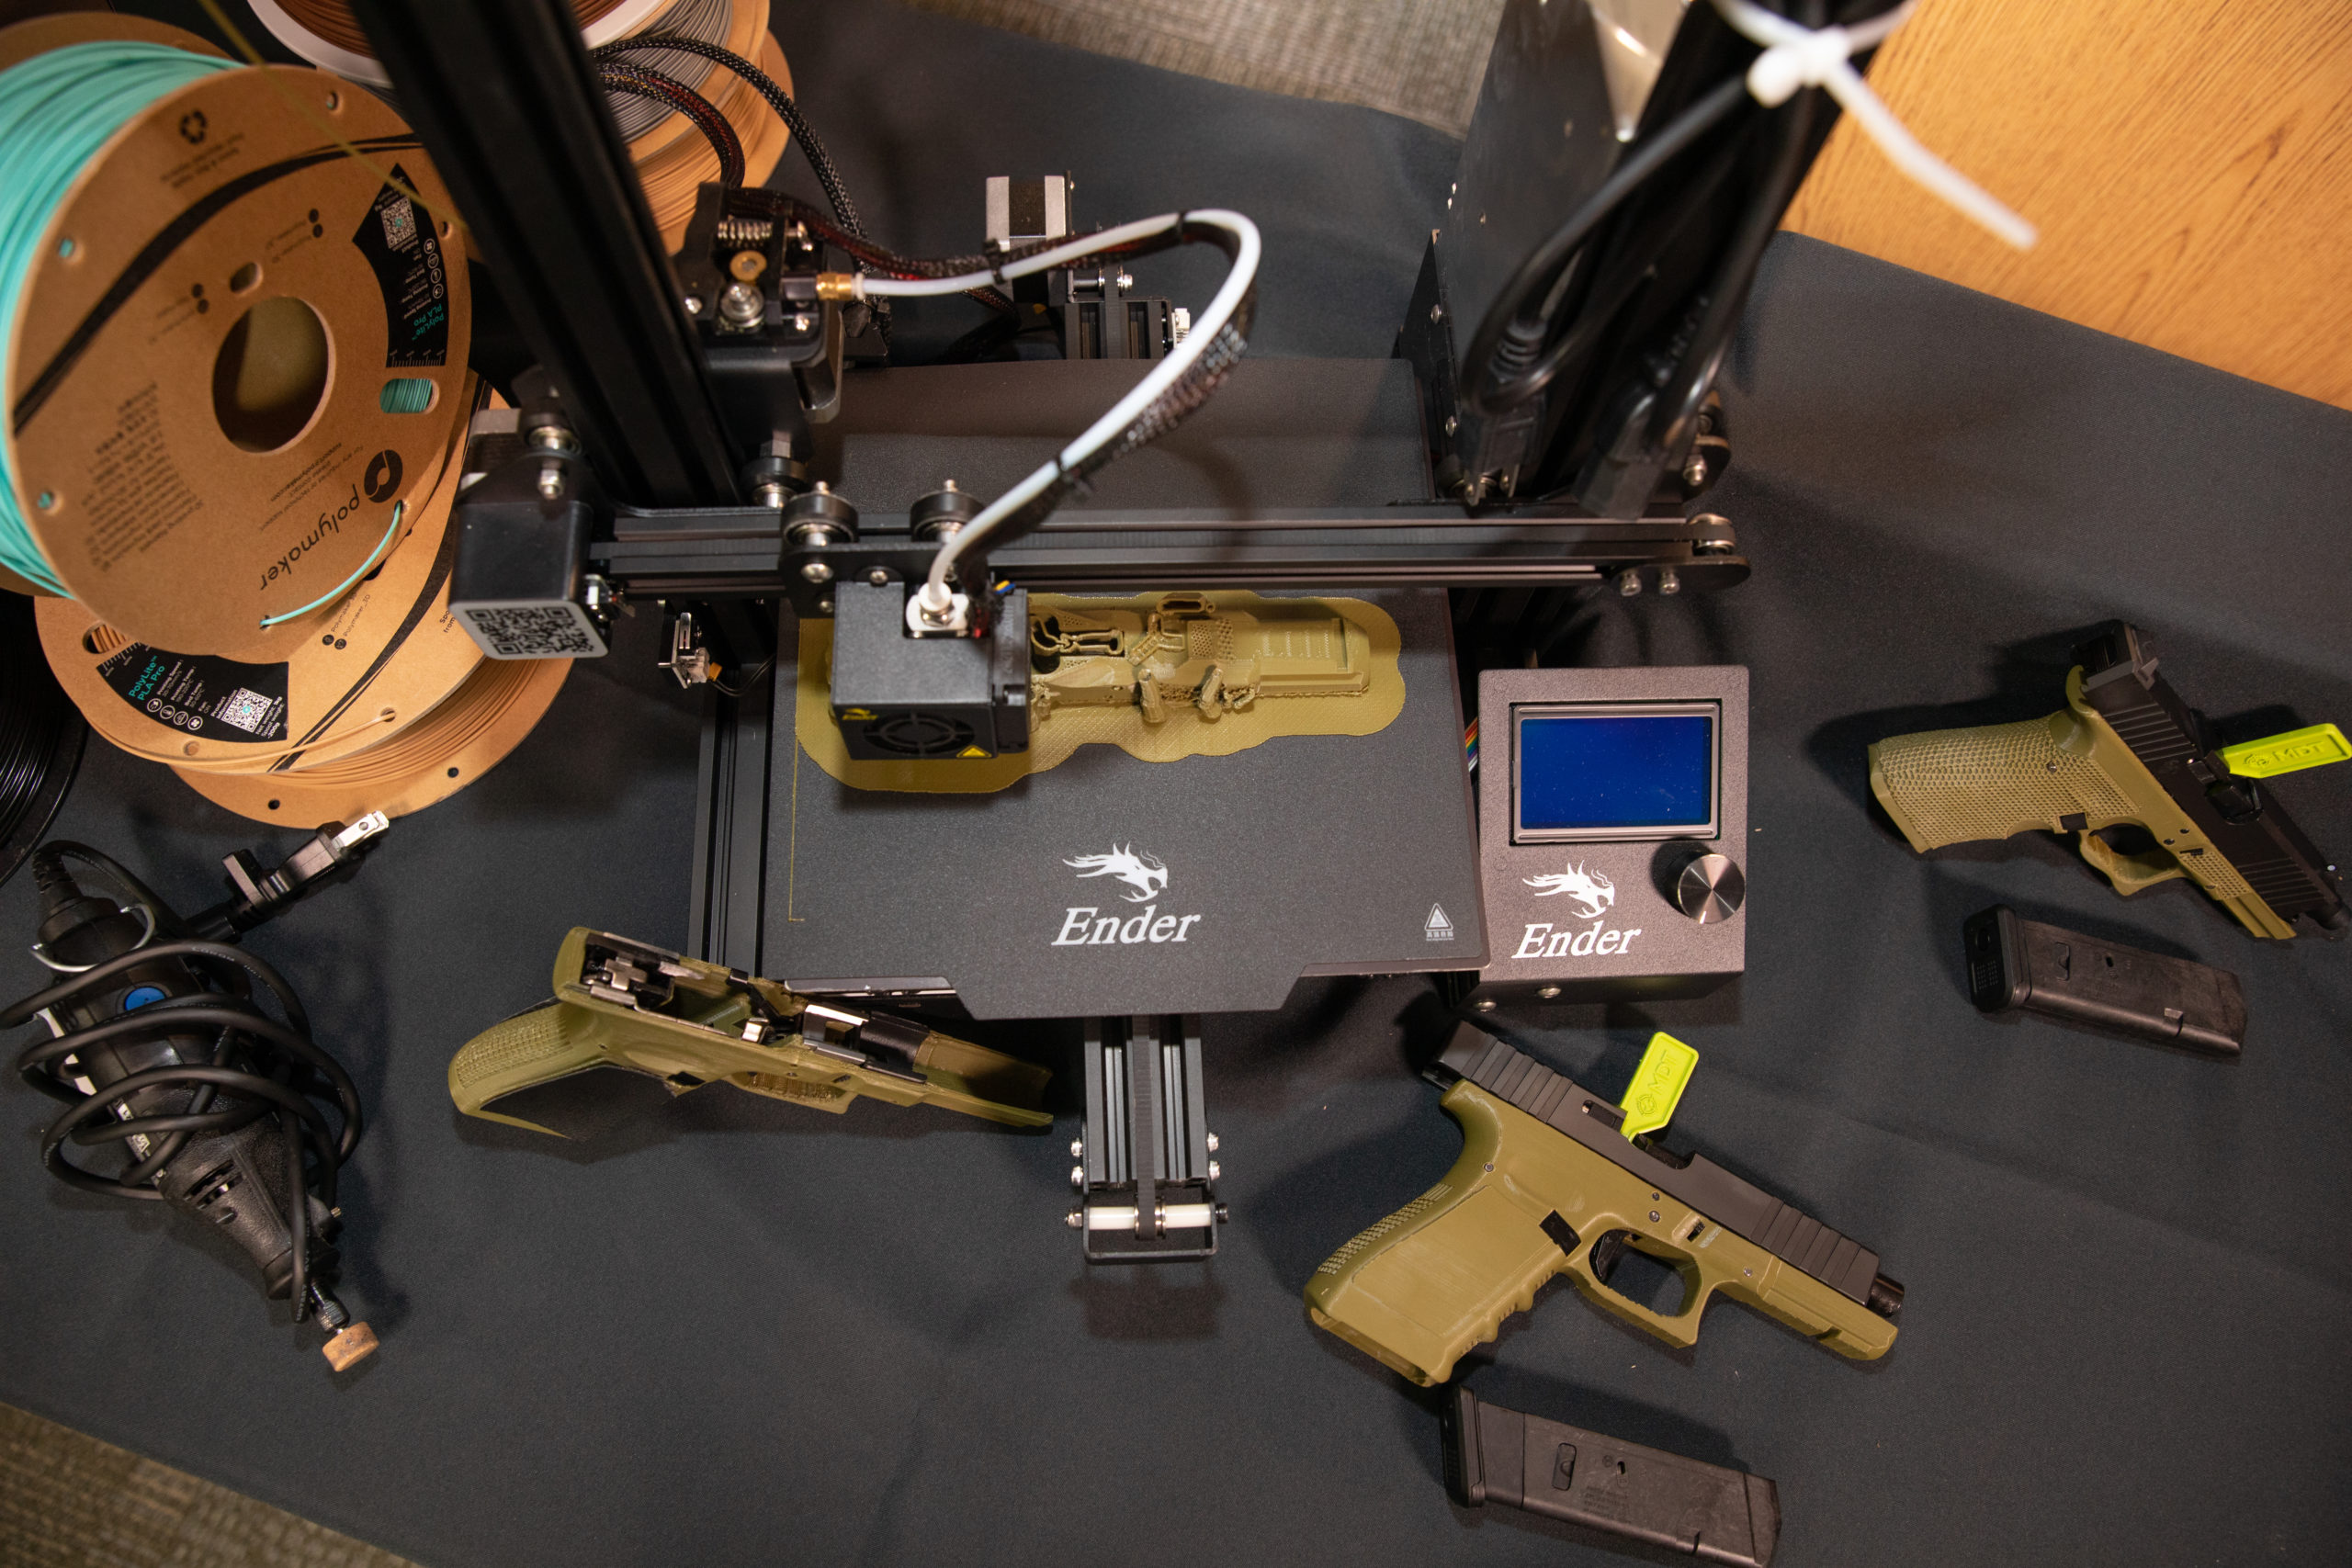 Ender 3D printer found building gun parts.